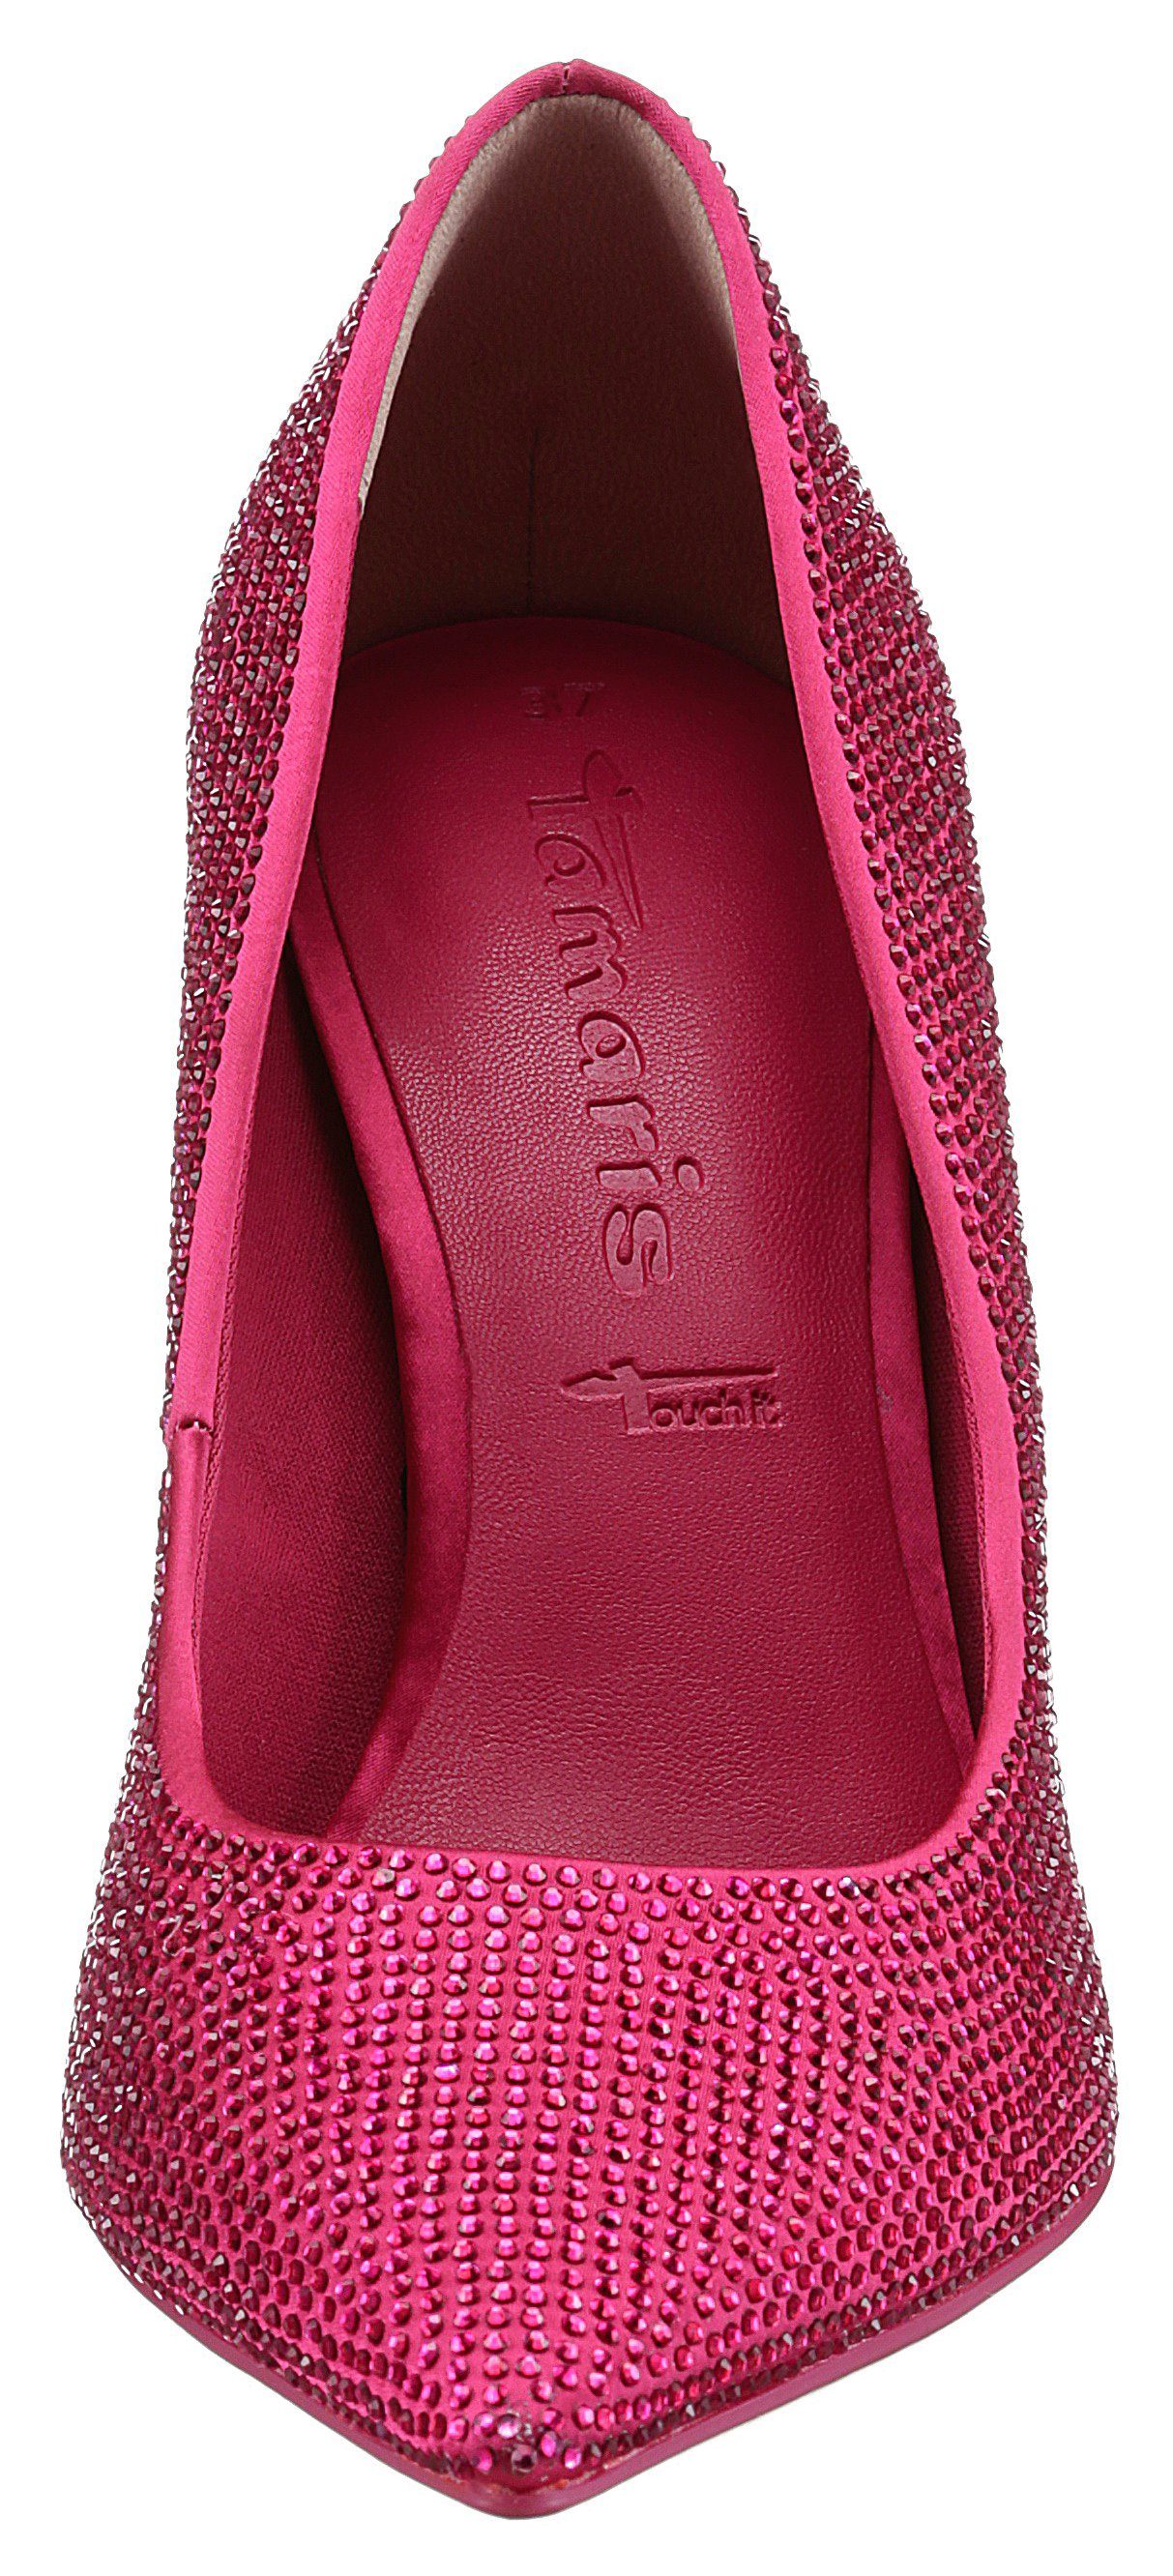 Tamaris in spitzer High-Heel-Pumps Form pink eleganter